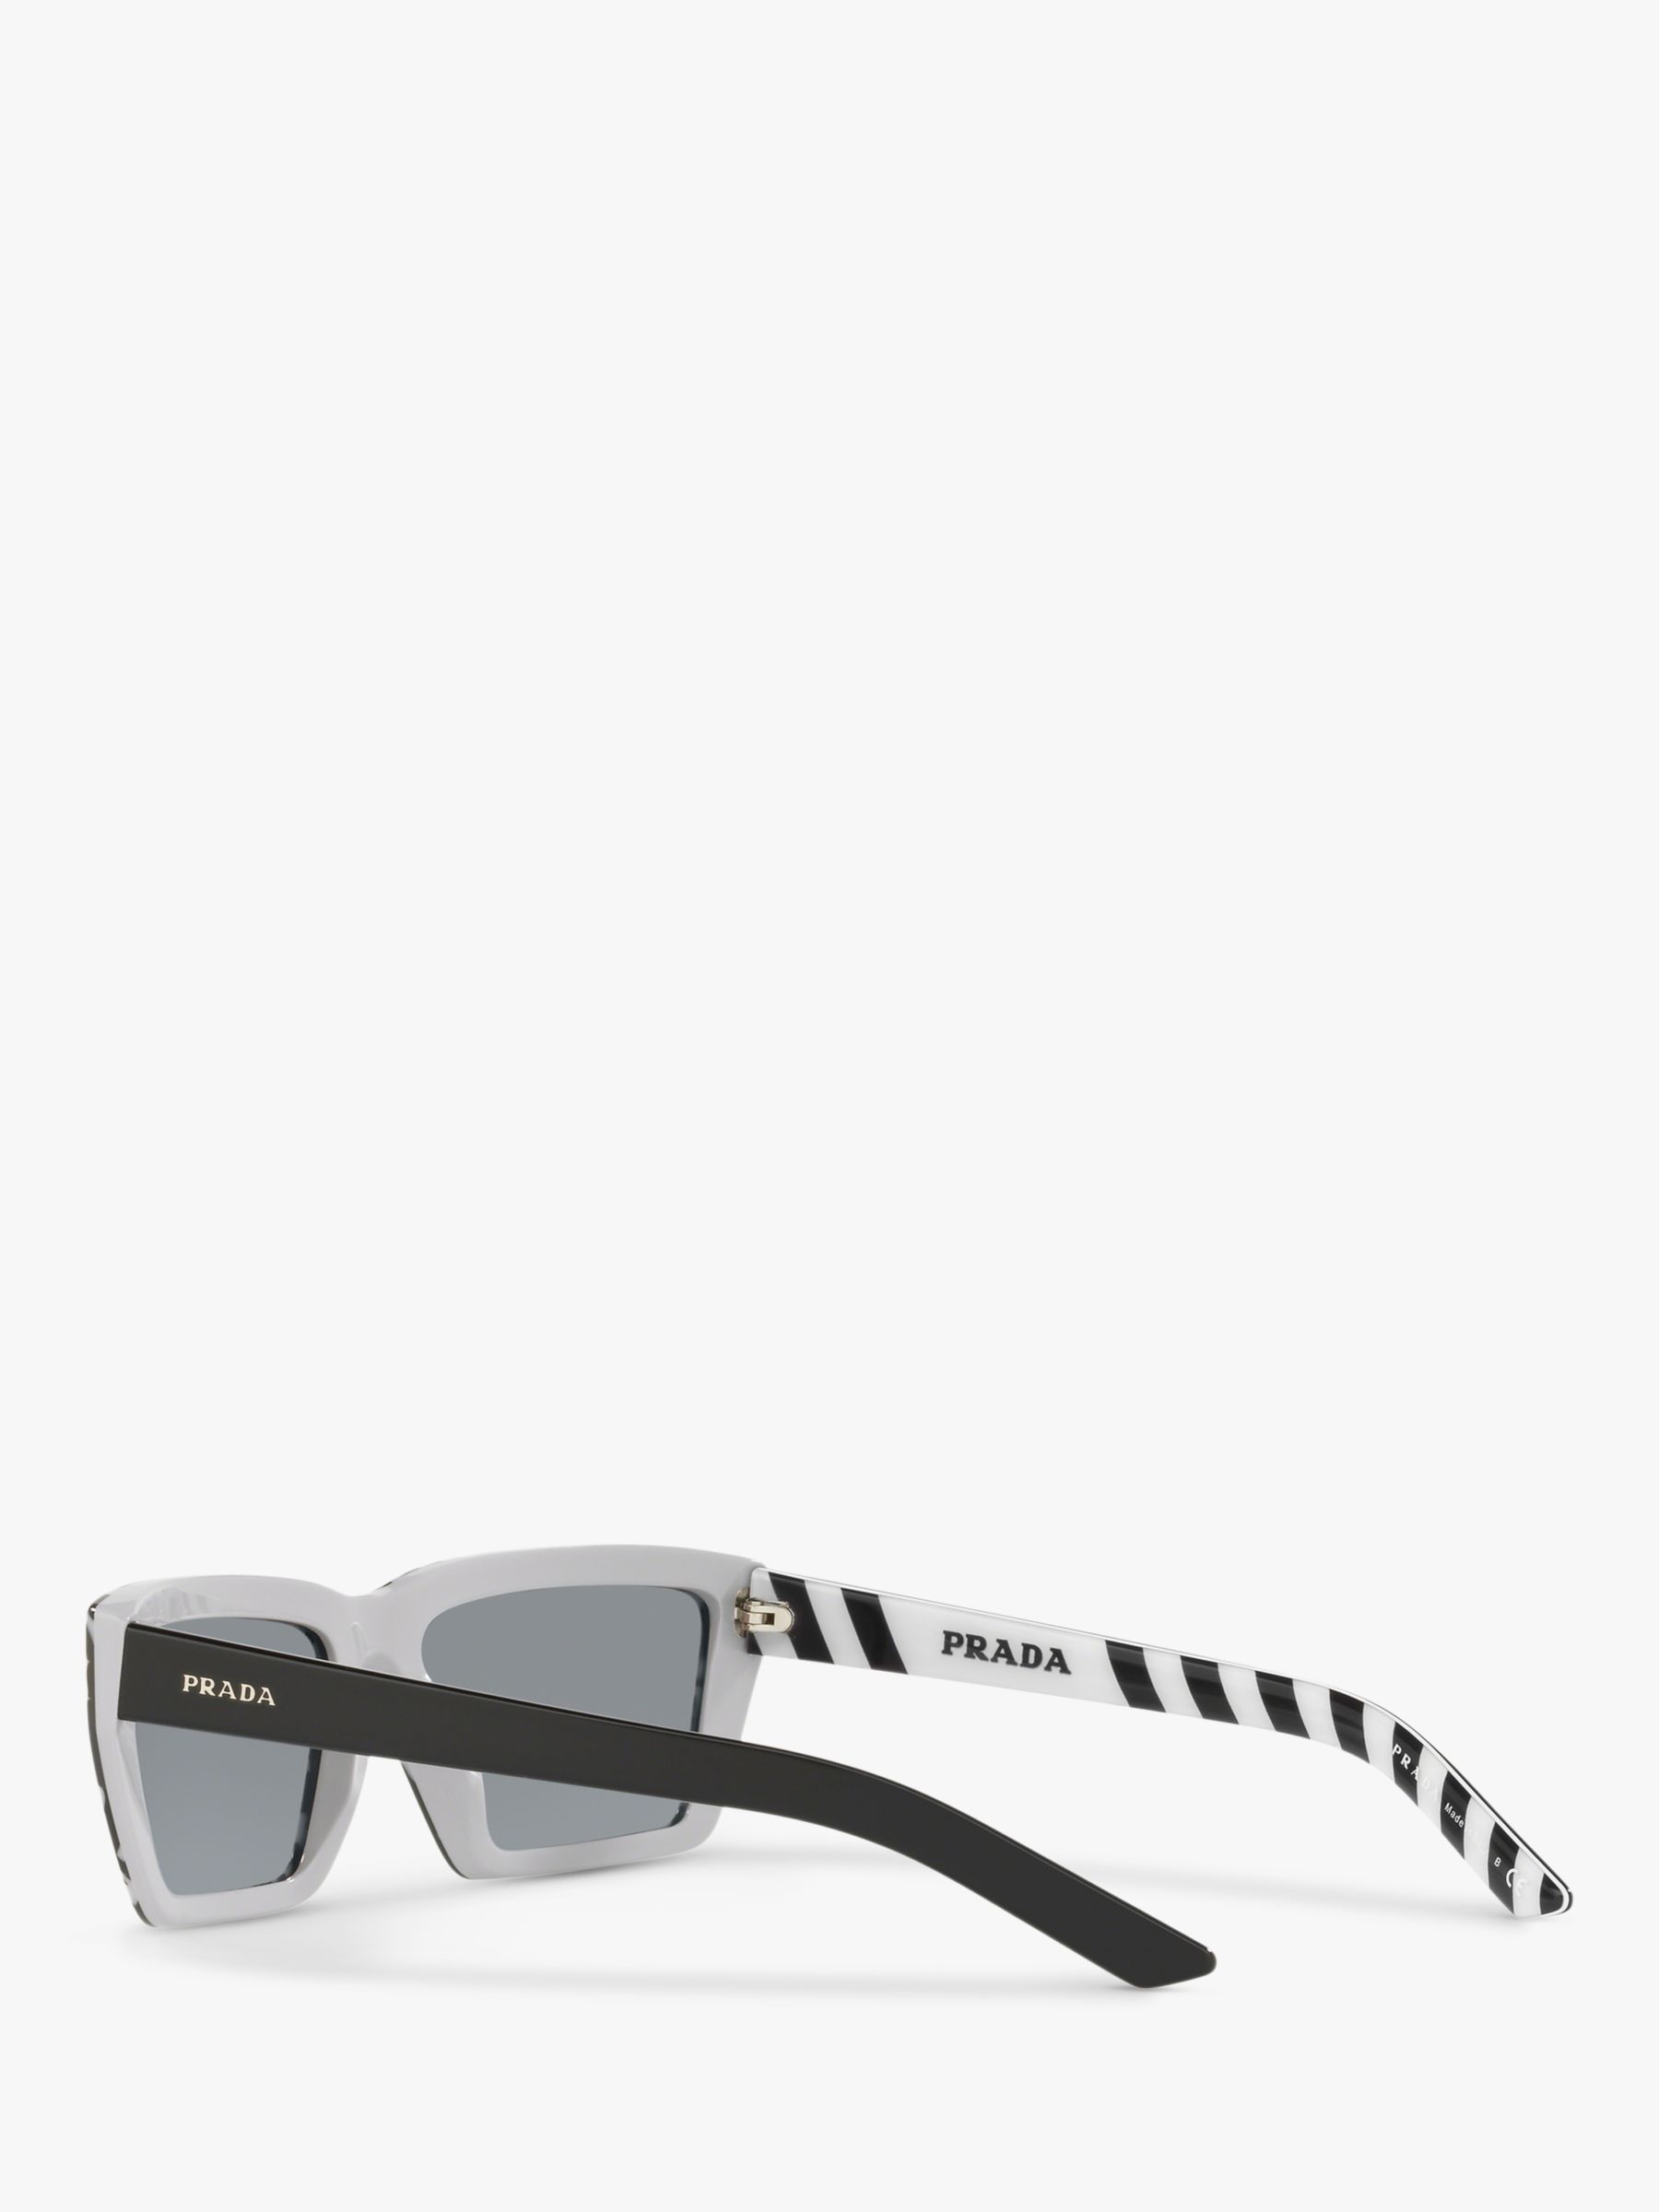 Prada PR 04VS Women's Rectangular Sunglasses, Camouflage Black/Grey